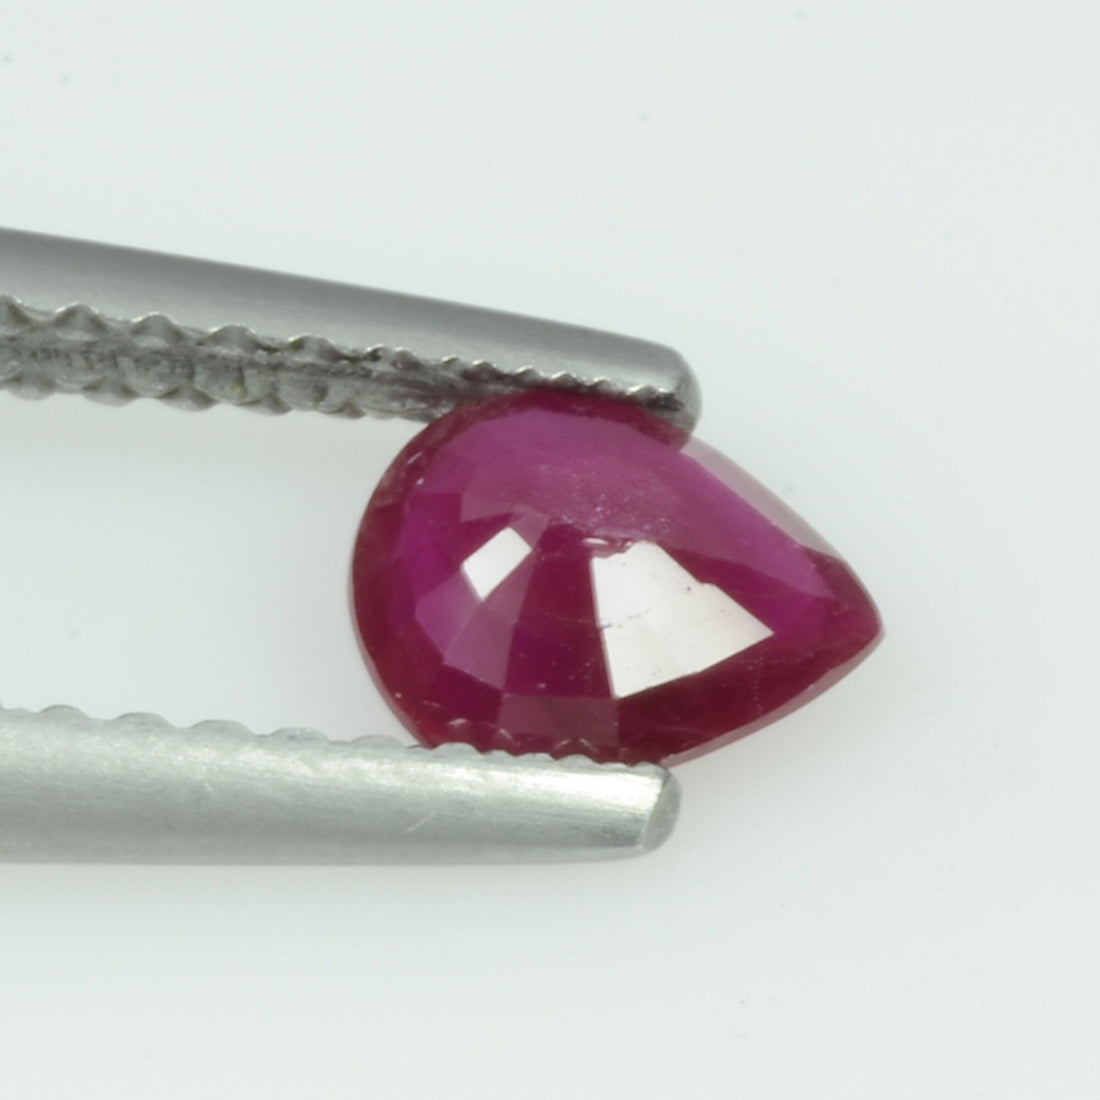 0.54 Cts Natural Burma Ruby Loose Gemstone Pear Cut